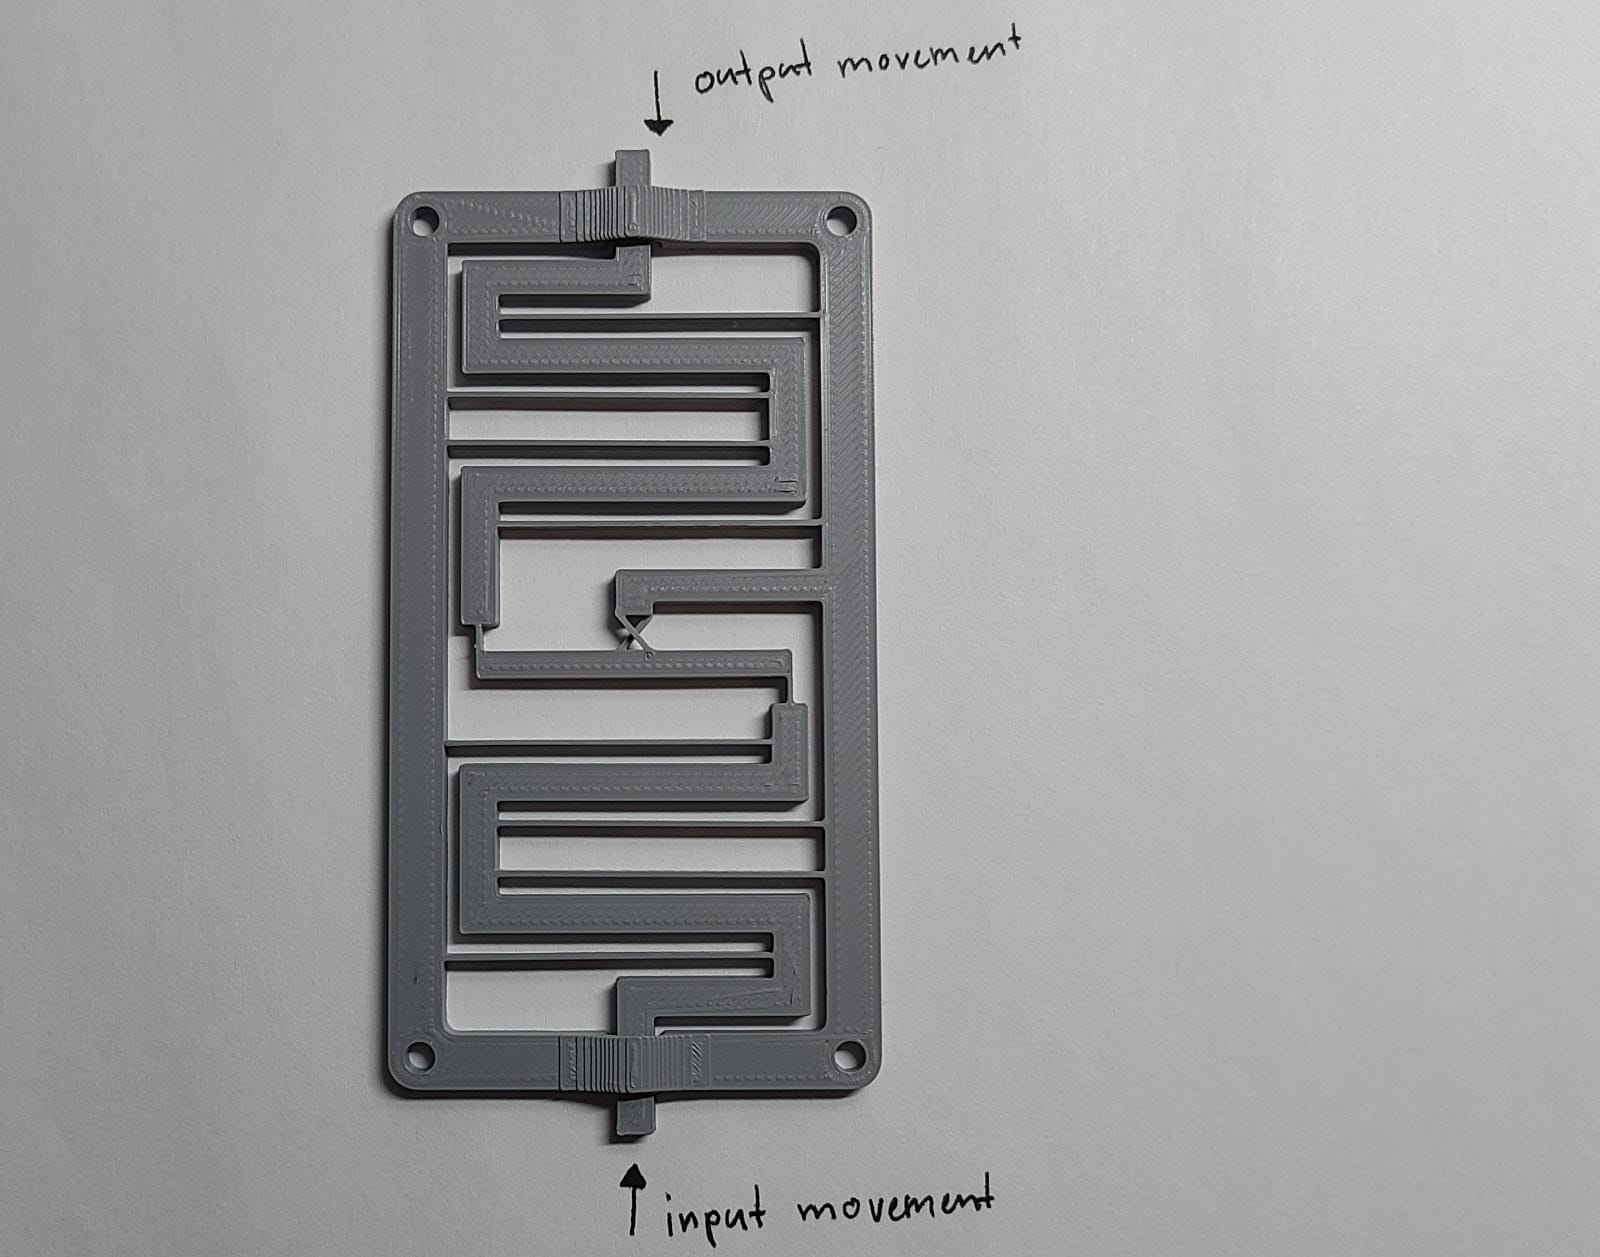 Linear Motion Inverter (Compliant Mechanism)